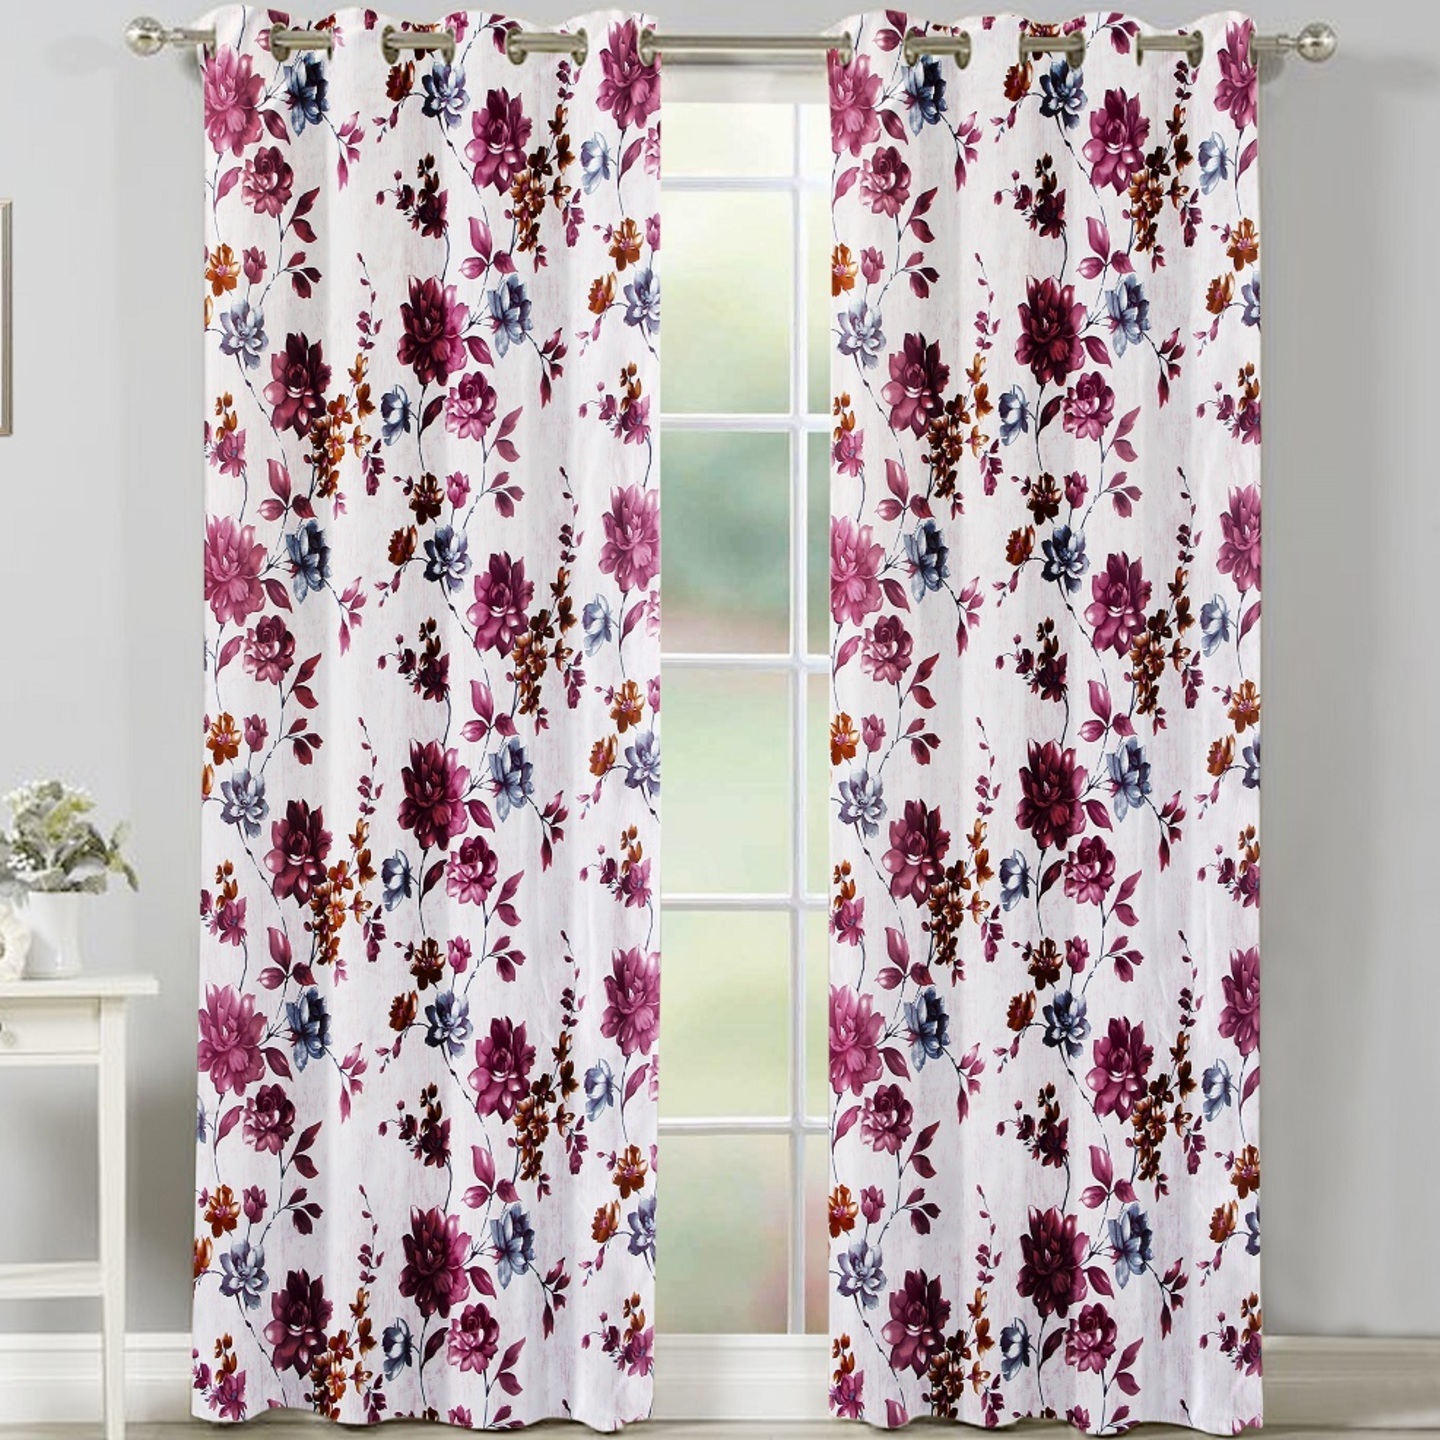 Handtex Home Floral Design Door Curtains 4x9 feet Set of 2 pcs Wine